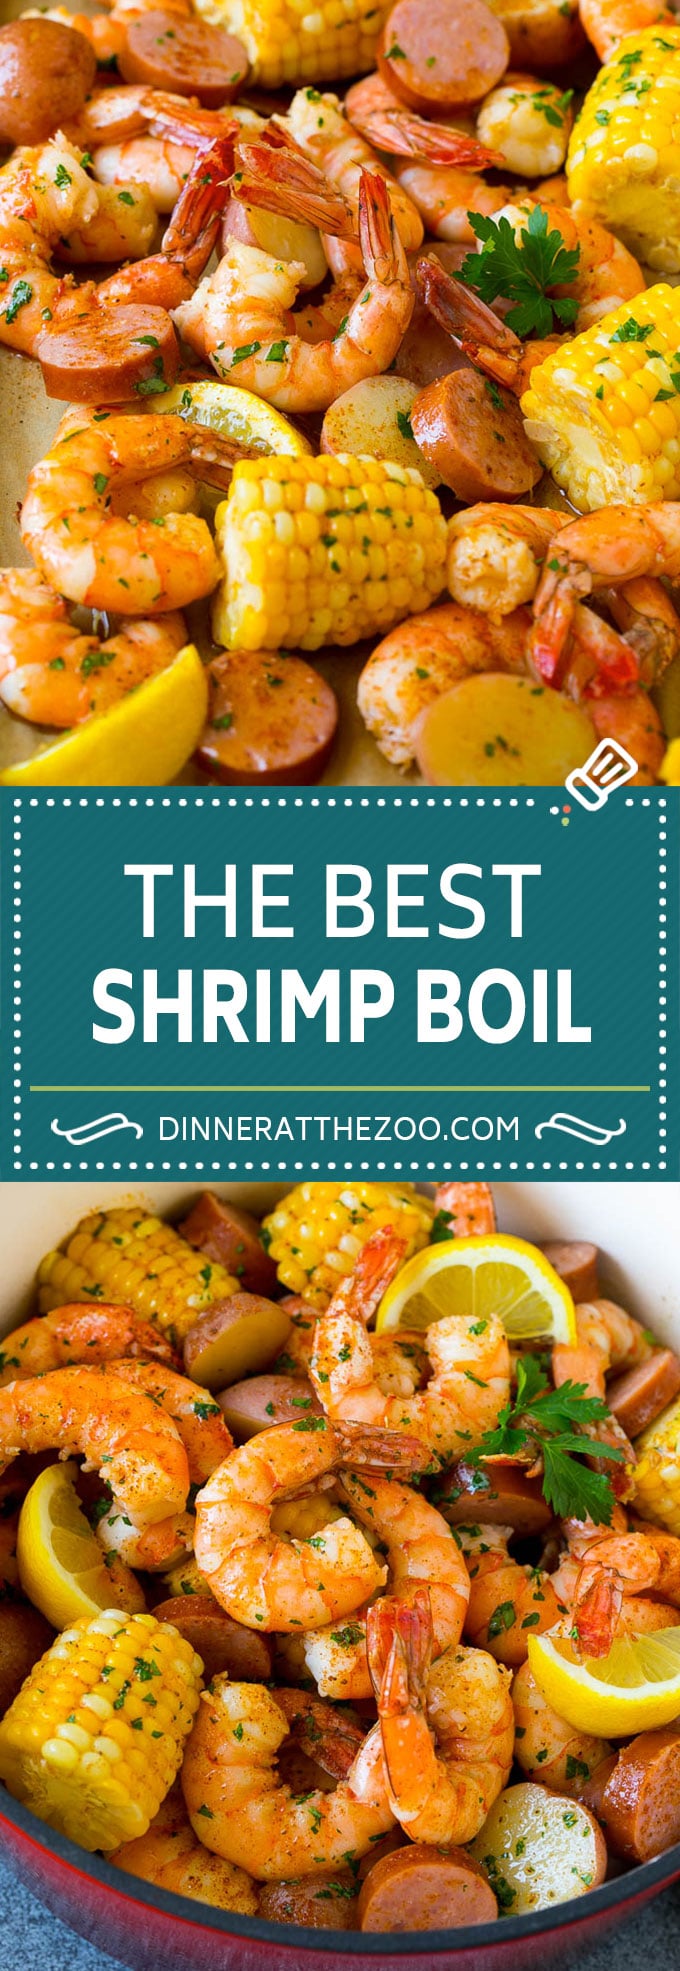 Shrimp Boil Recipe | Boiled Shrimp | Low Country Boil #shrimp #sausage #corn #potatoes #seafood #dinner #dinneratthezoo